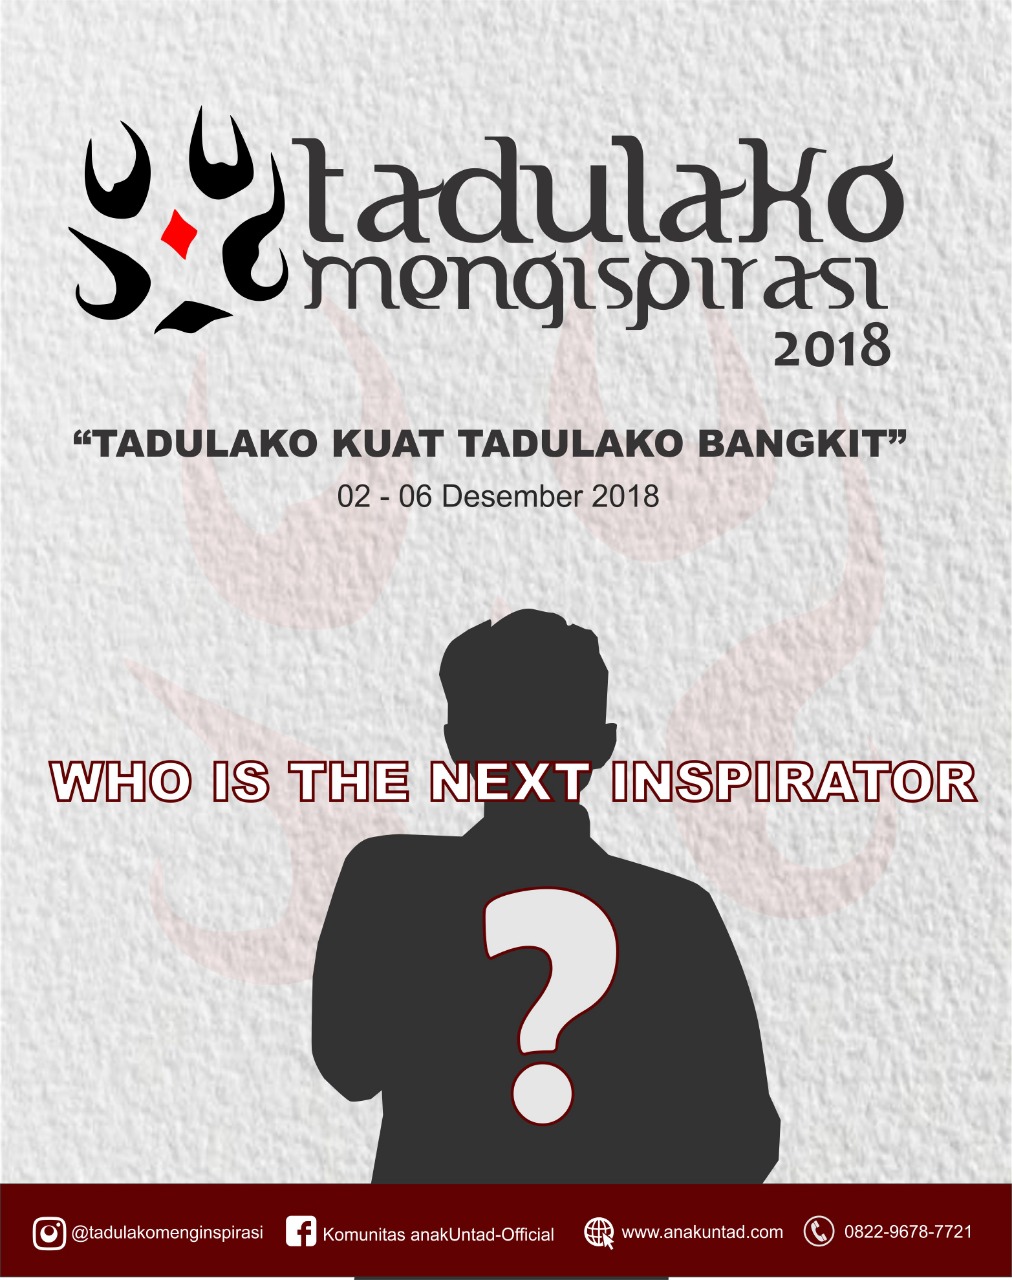 Pendaftaran Calon Inspirator Tadulako Menginspirasi 2018, Dibuka!